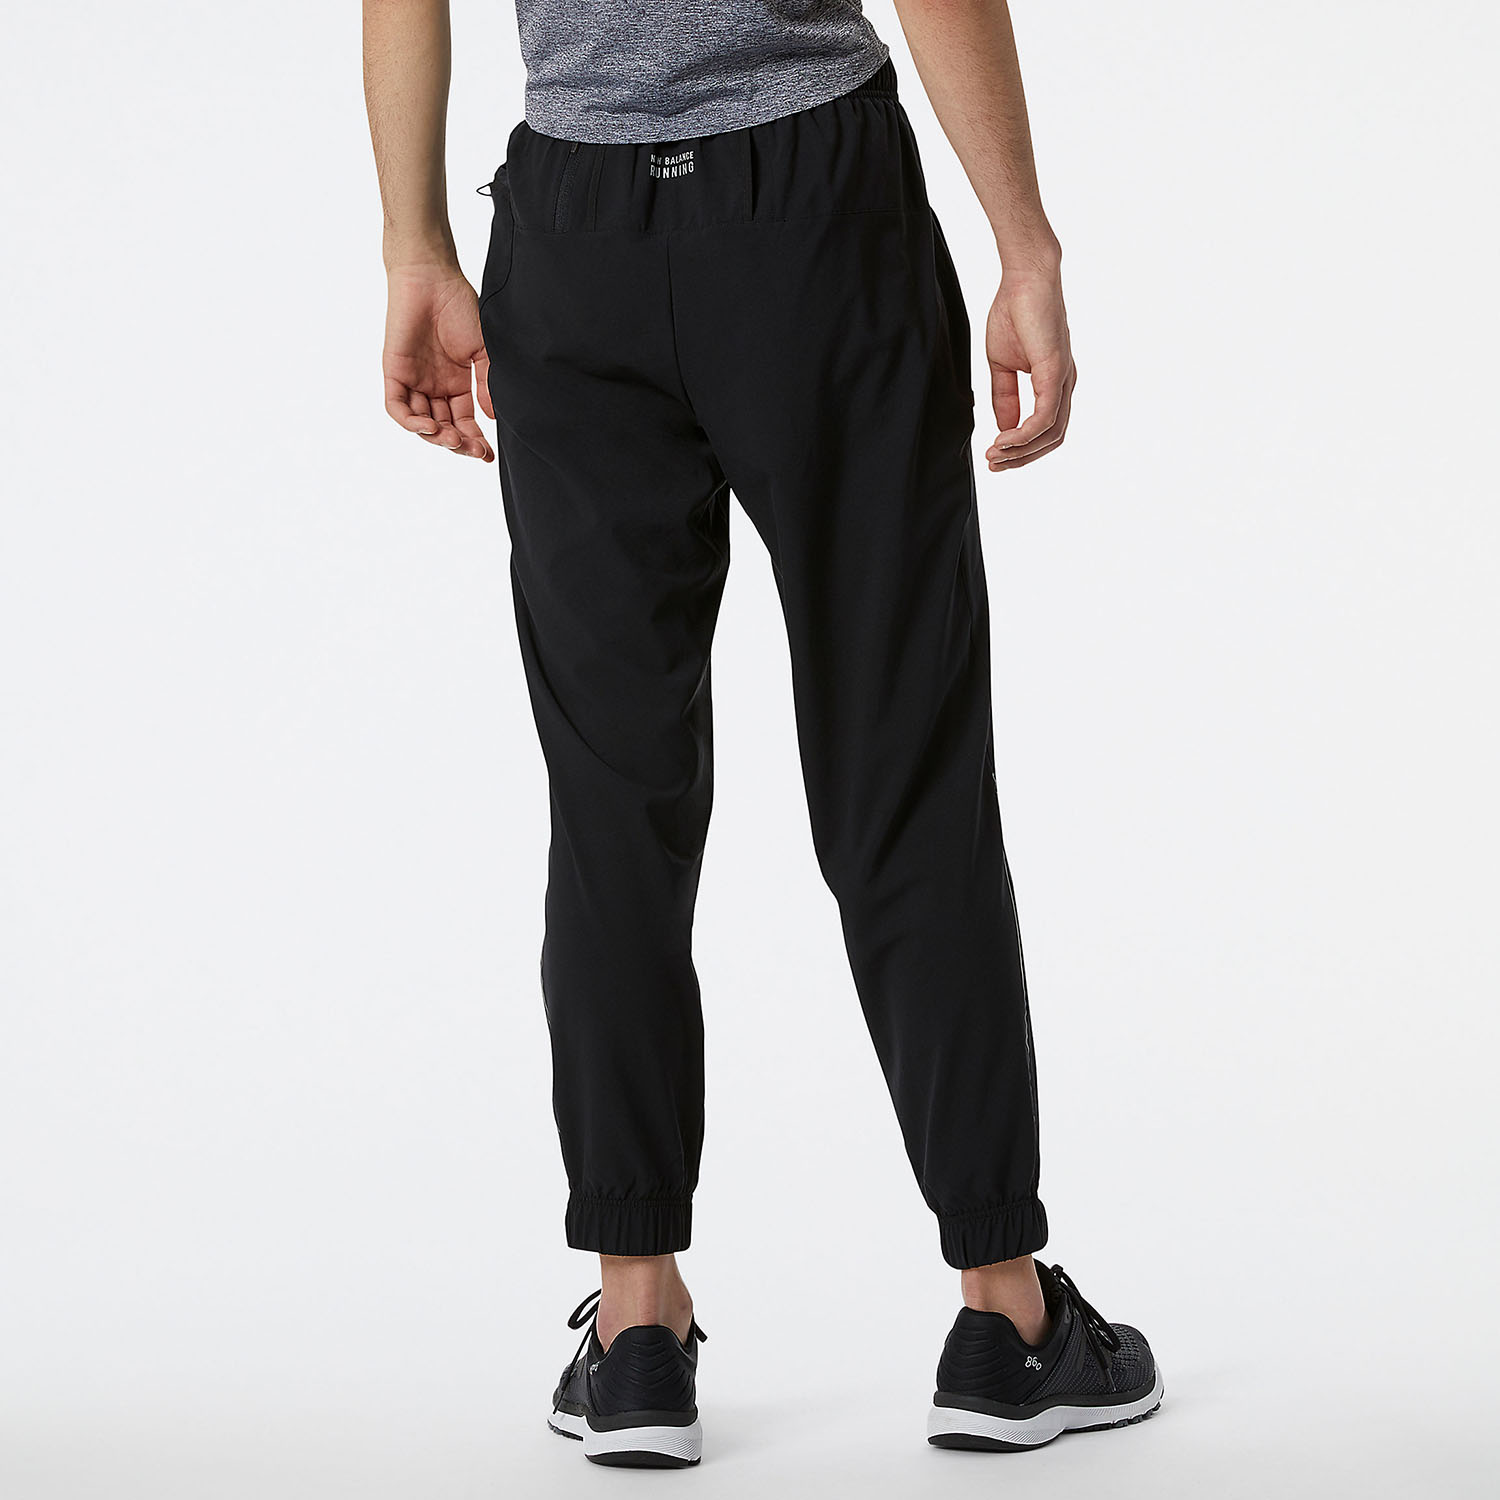 New Balance Impact Men's Running Pants - Black